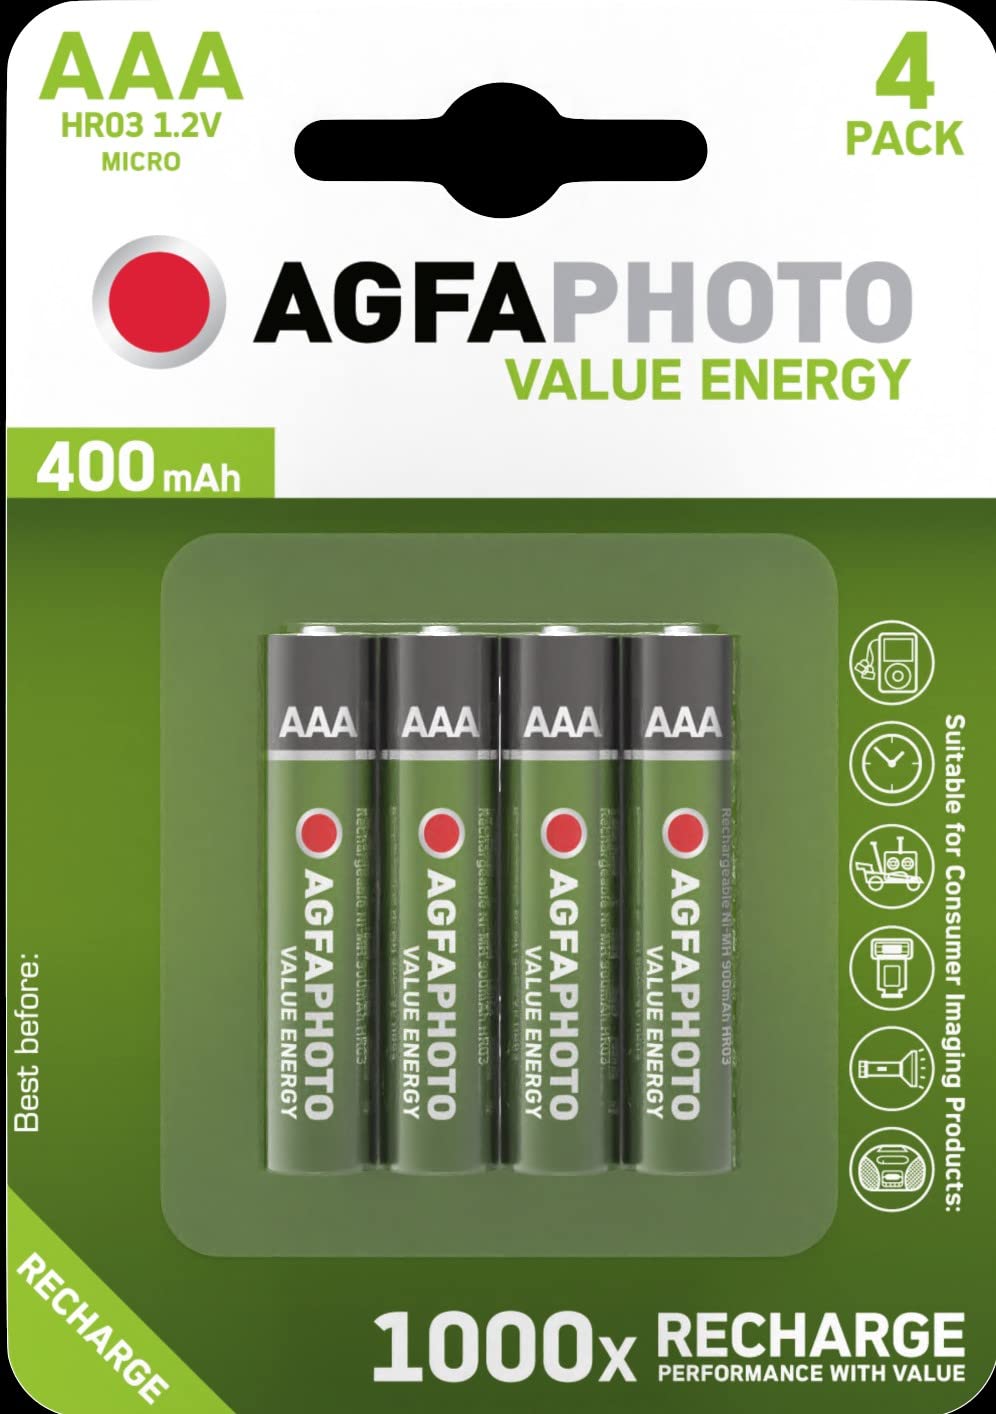 Exclusif Agfa Piles AAA rechargeables 400 mAh NtaA5Ejt8 bien vendre